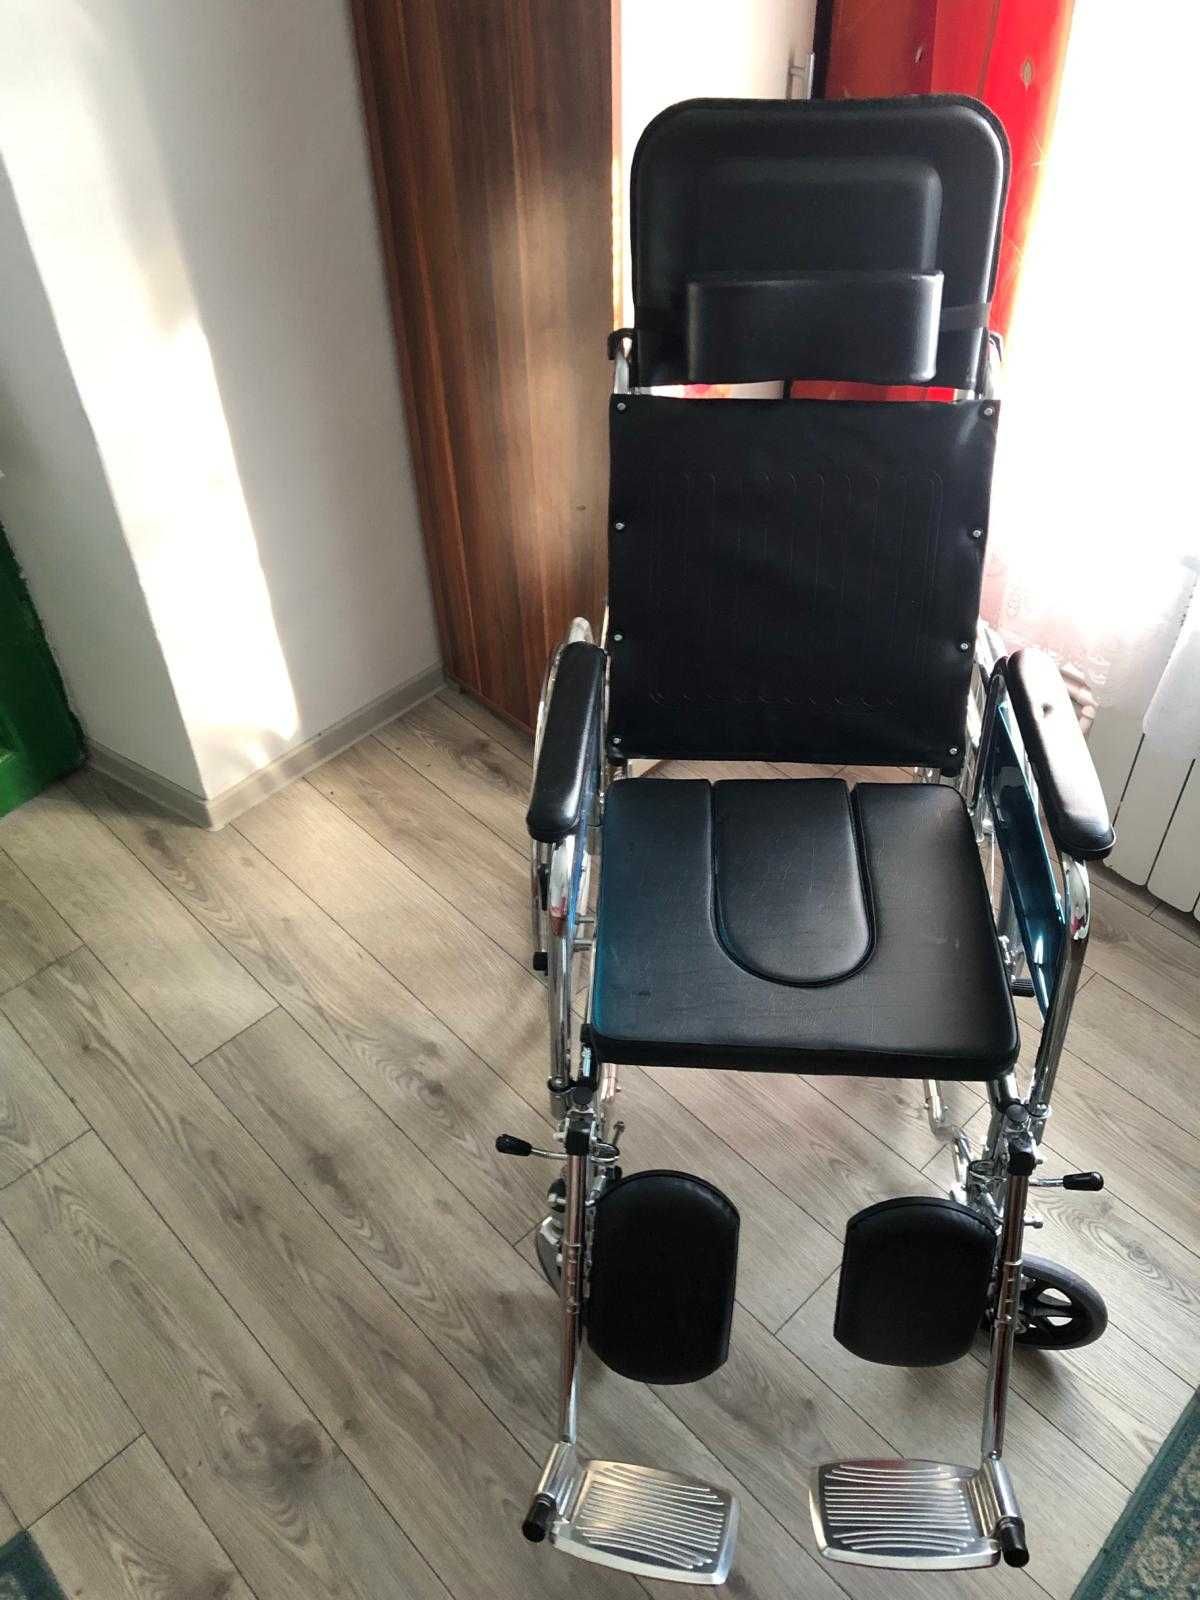 scaun rotile si ingrijire persoana imobilizata (toate din imagini)